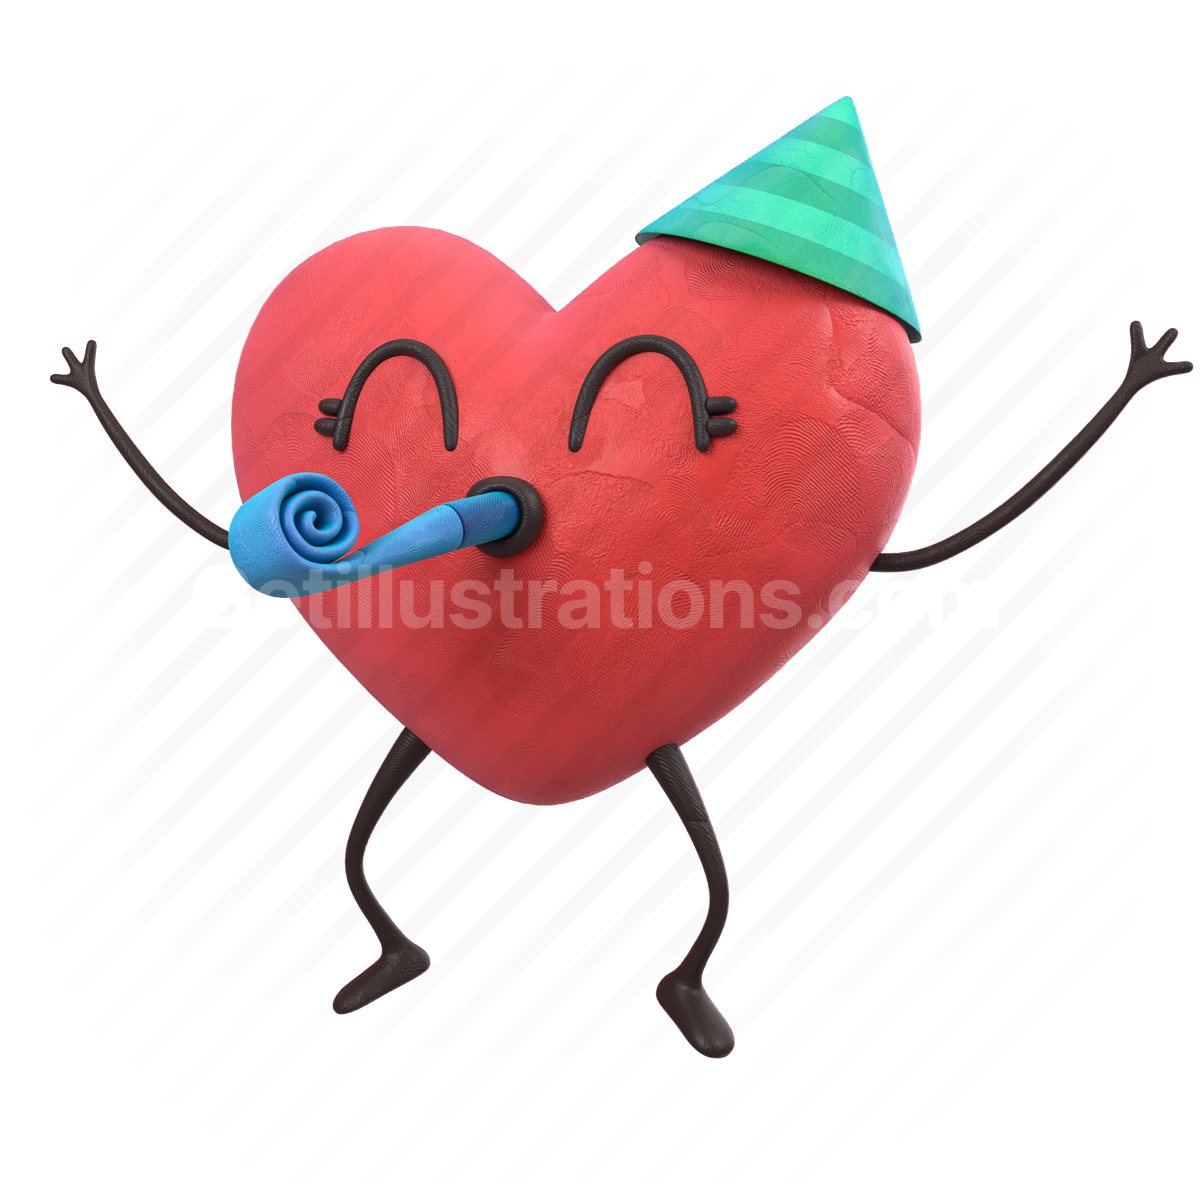 heart, love, romance, romantic, emoticon, emoji, character, party, celebration, celebrate, occasion, event